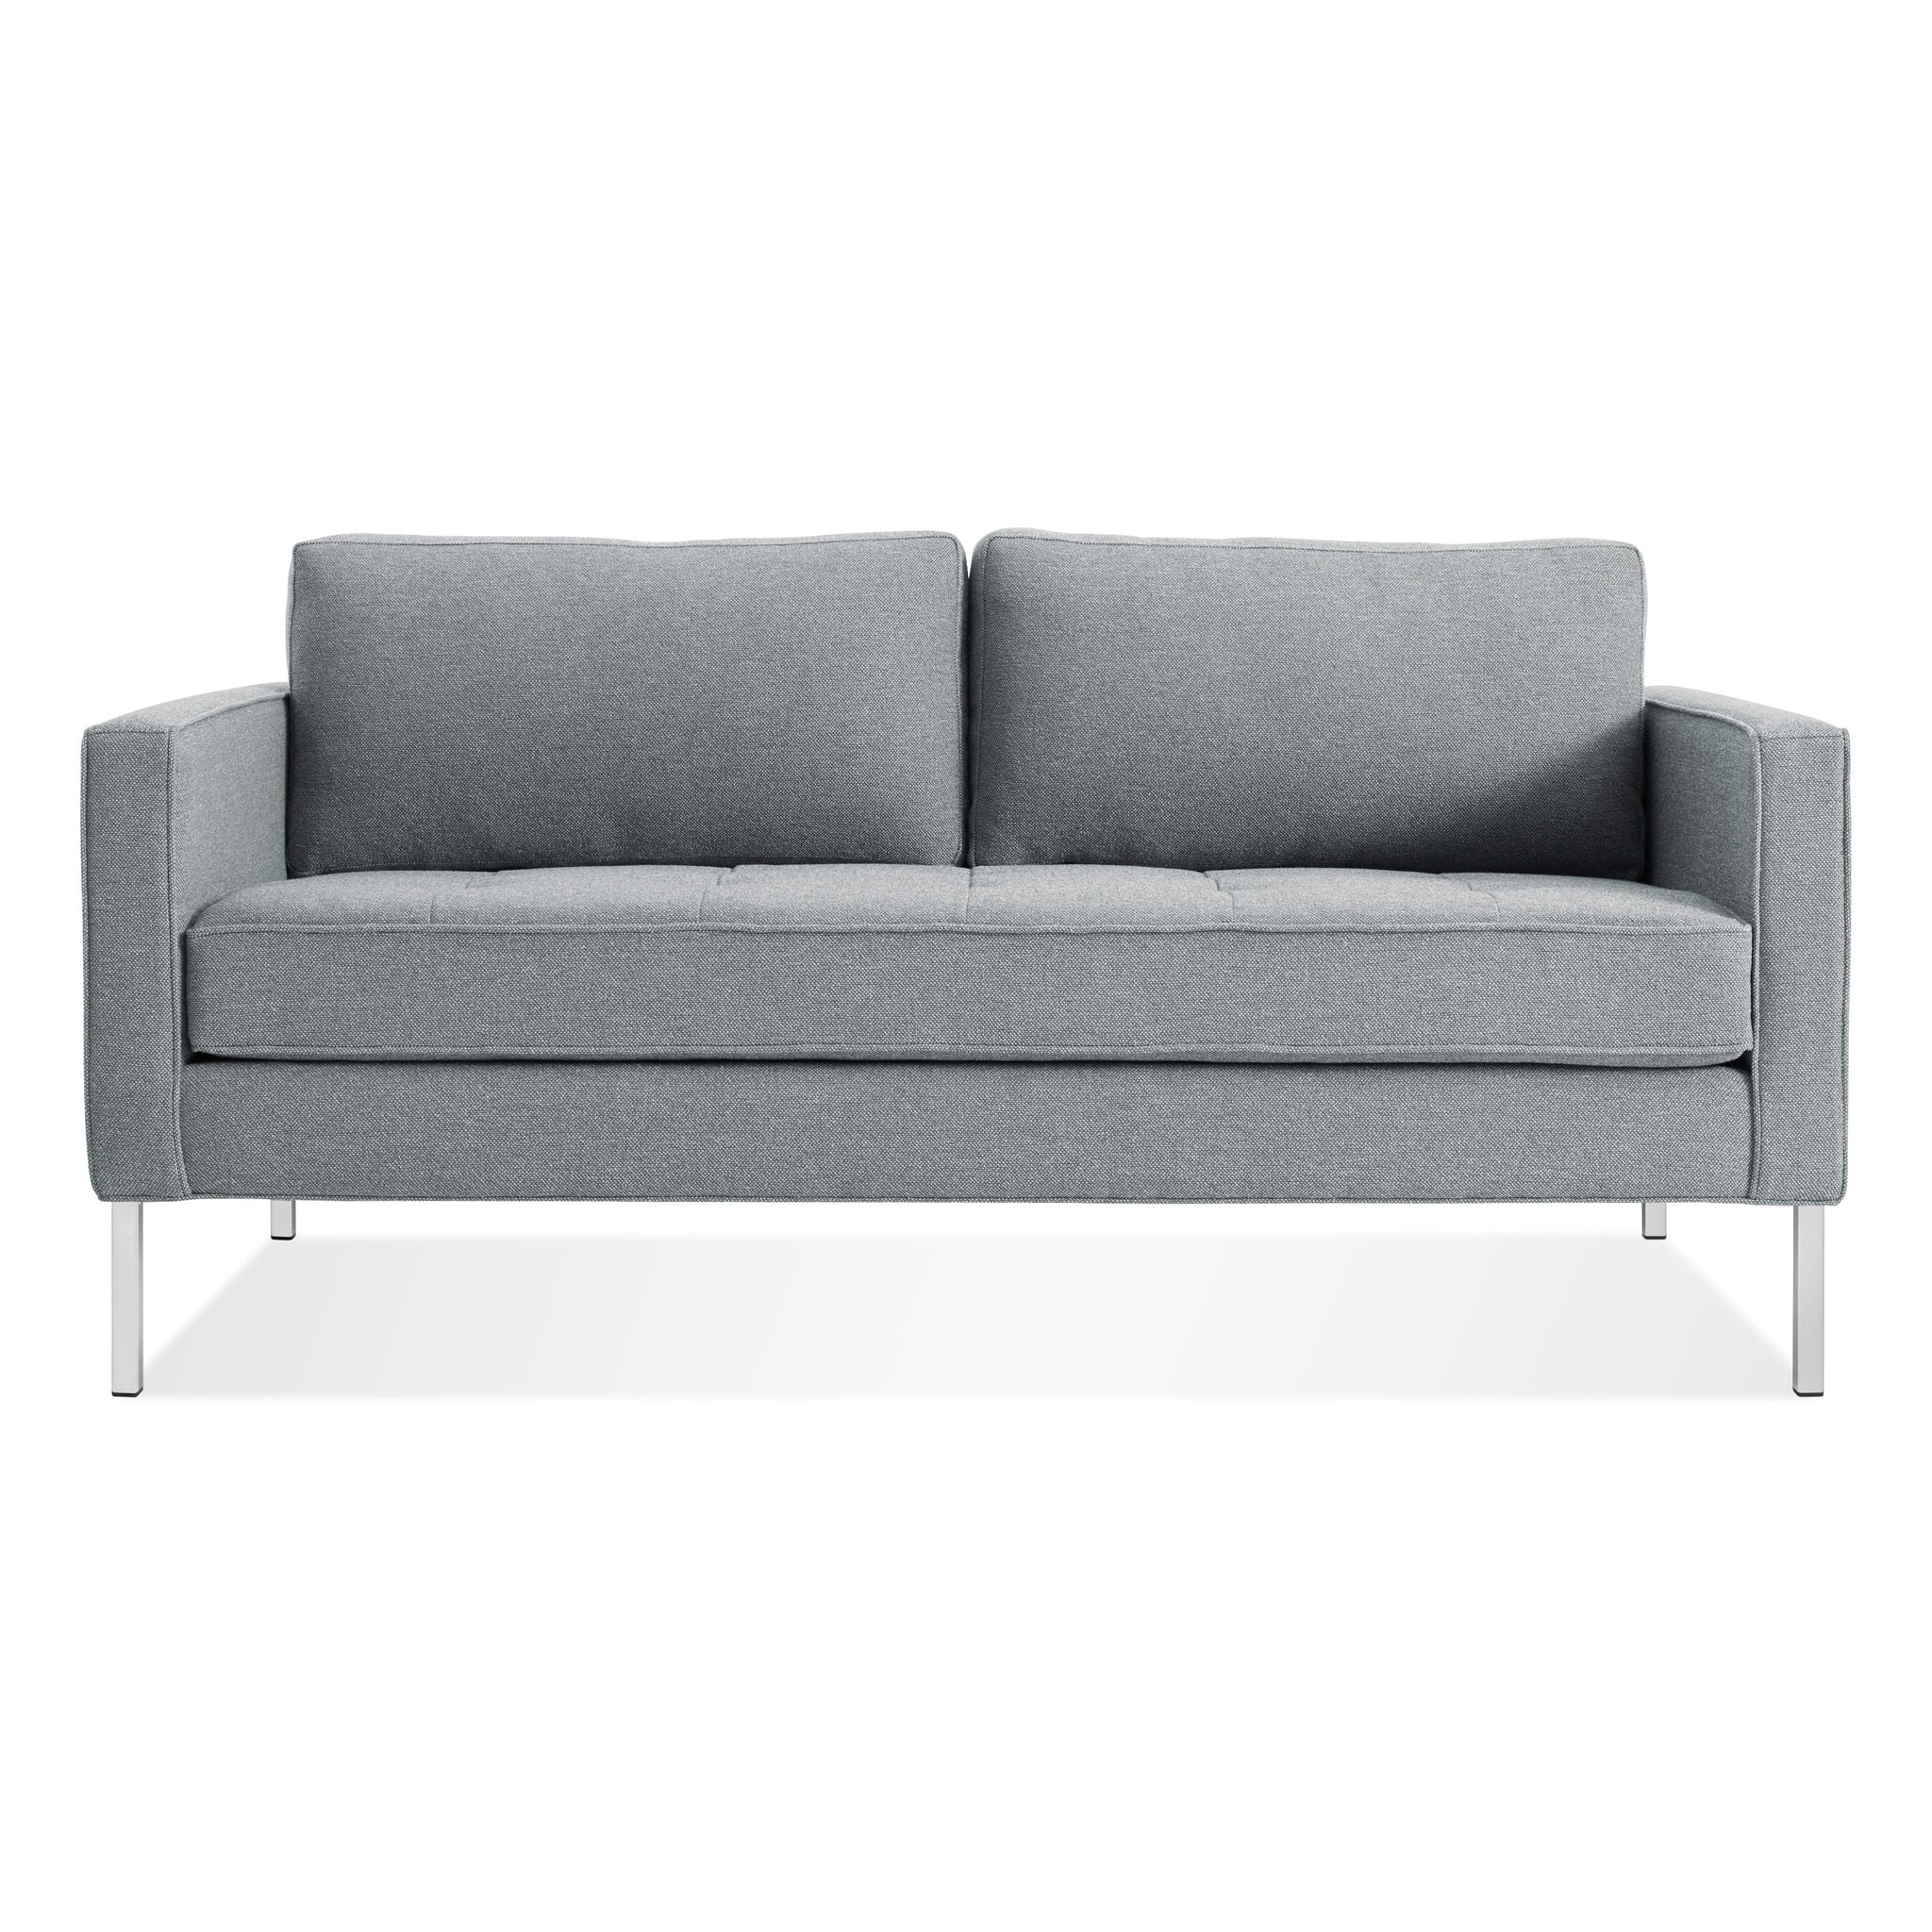 blu dot paramount 66 inch sofa sanford ceramic / stainless steel